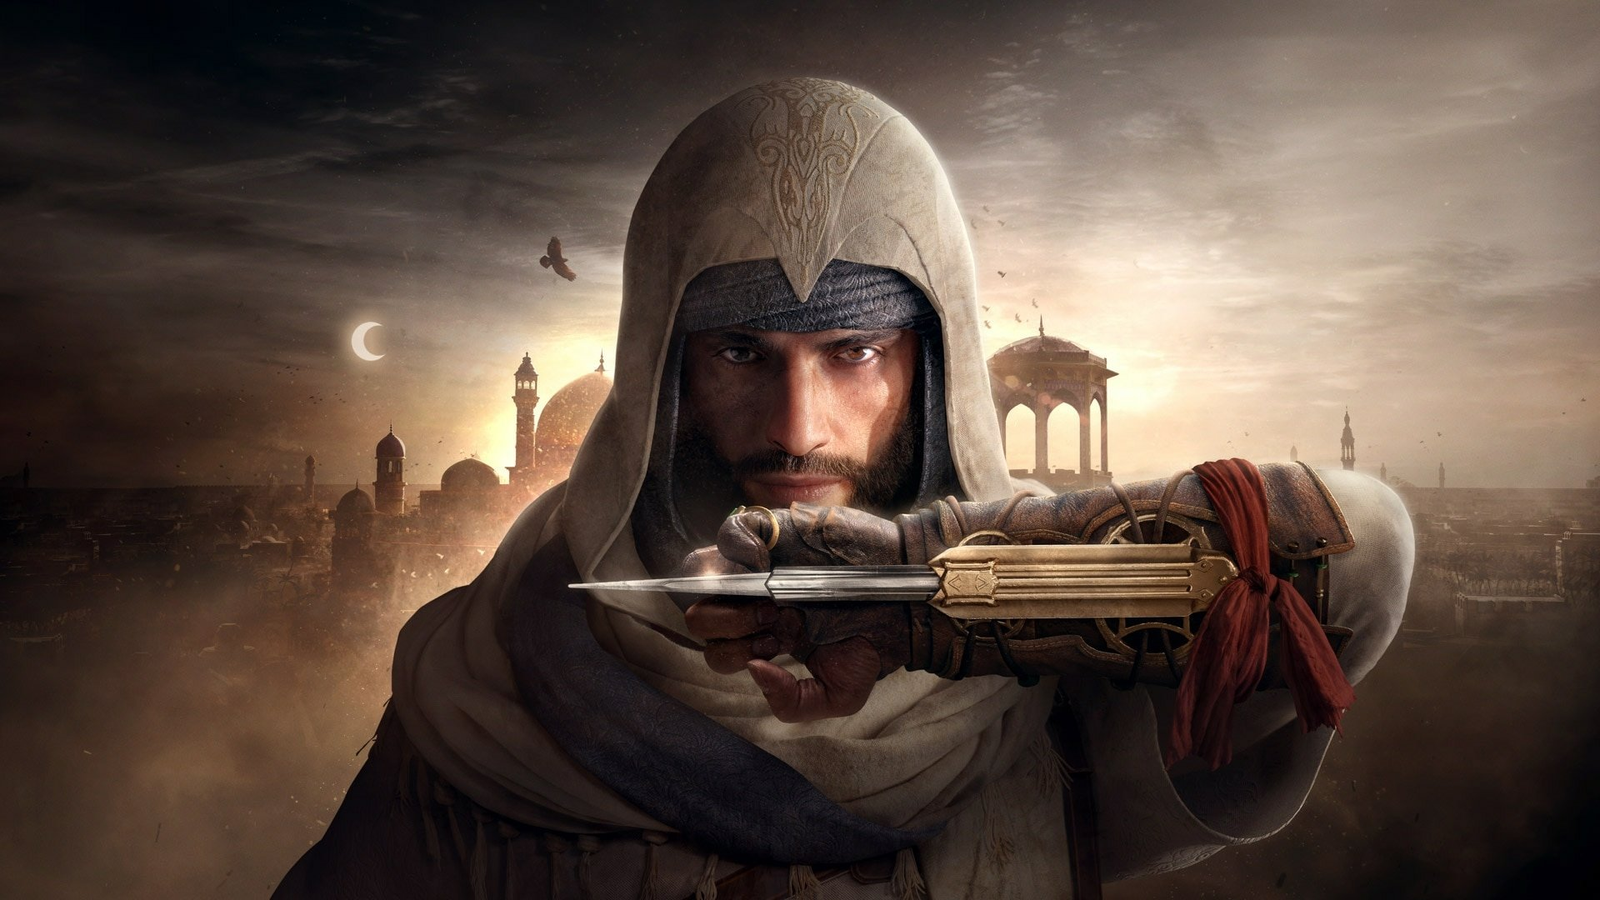 Trade In Assassin's Creed Mirage Collector's Case Bundle GameStop Exclusive  – PlayStation 4